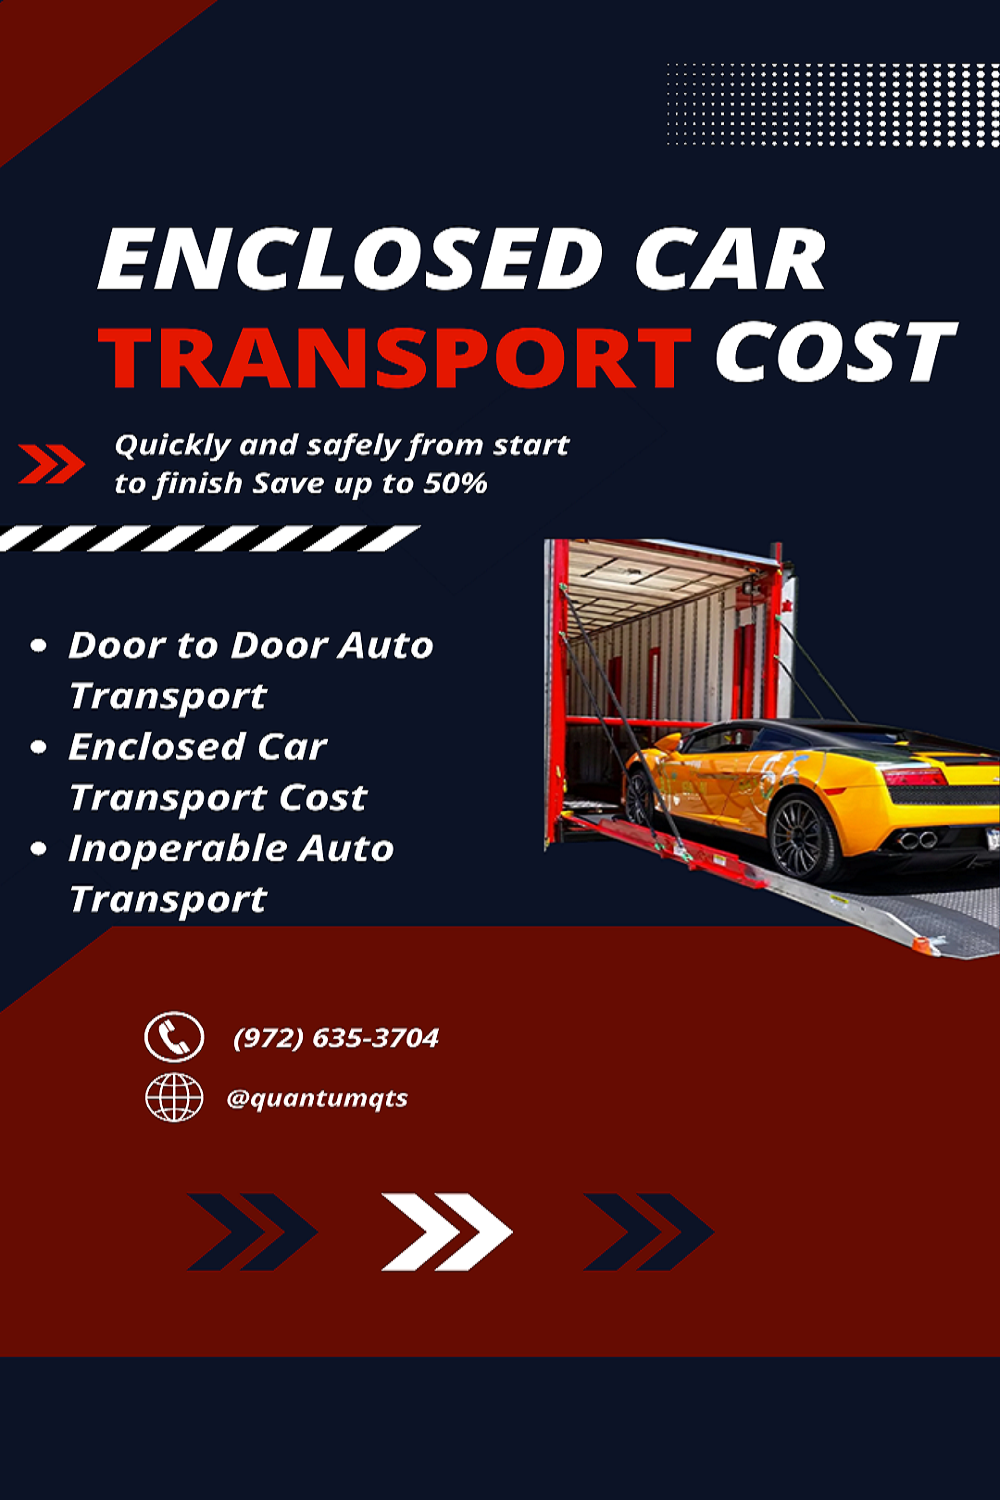 Enclsoed car Transport cost